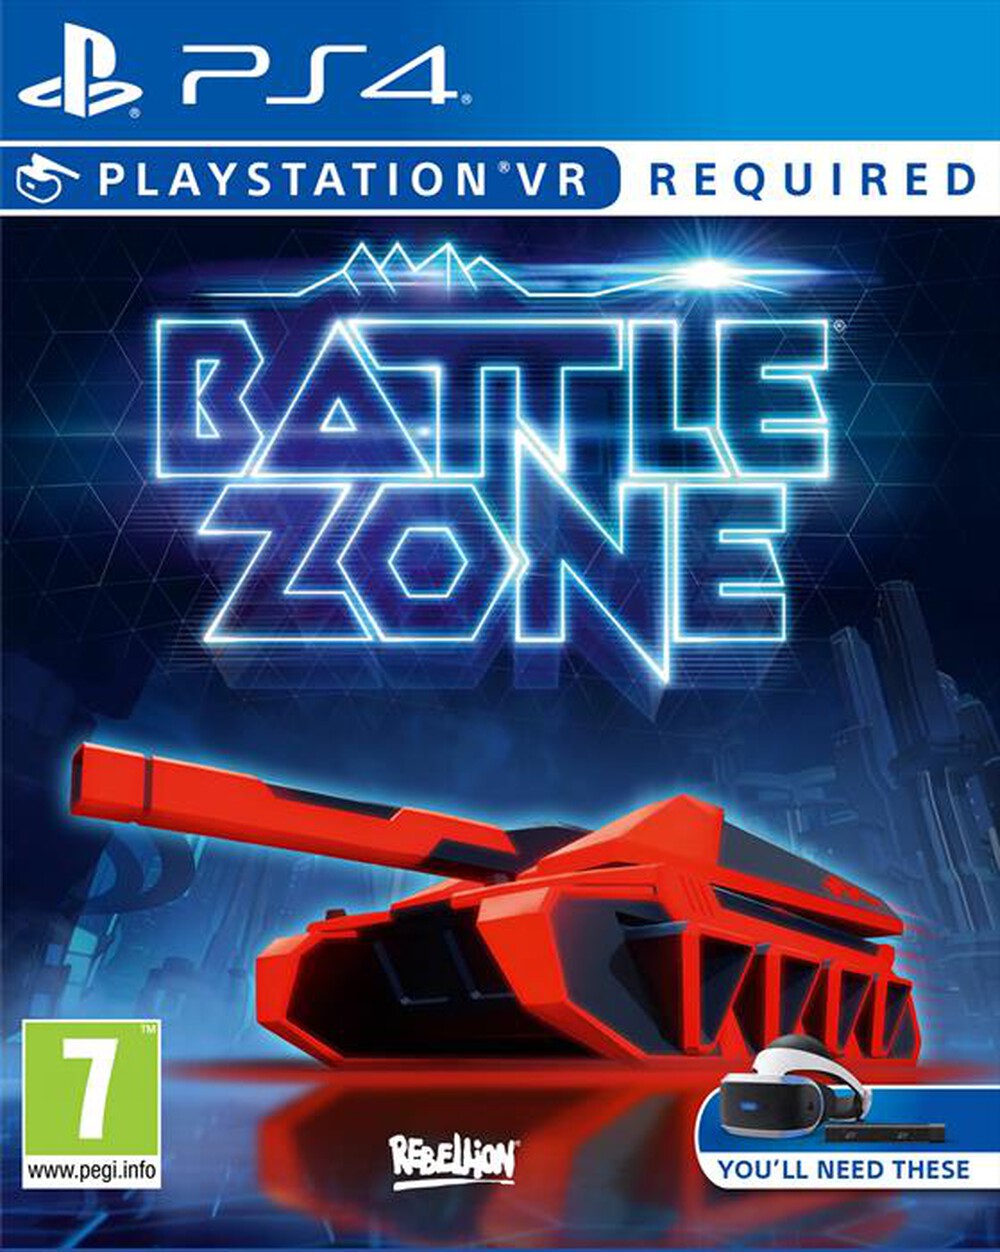 "SONY COMPUTER - Battlezone - Playstation VR - "